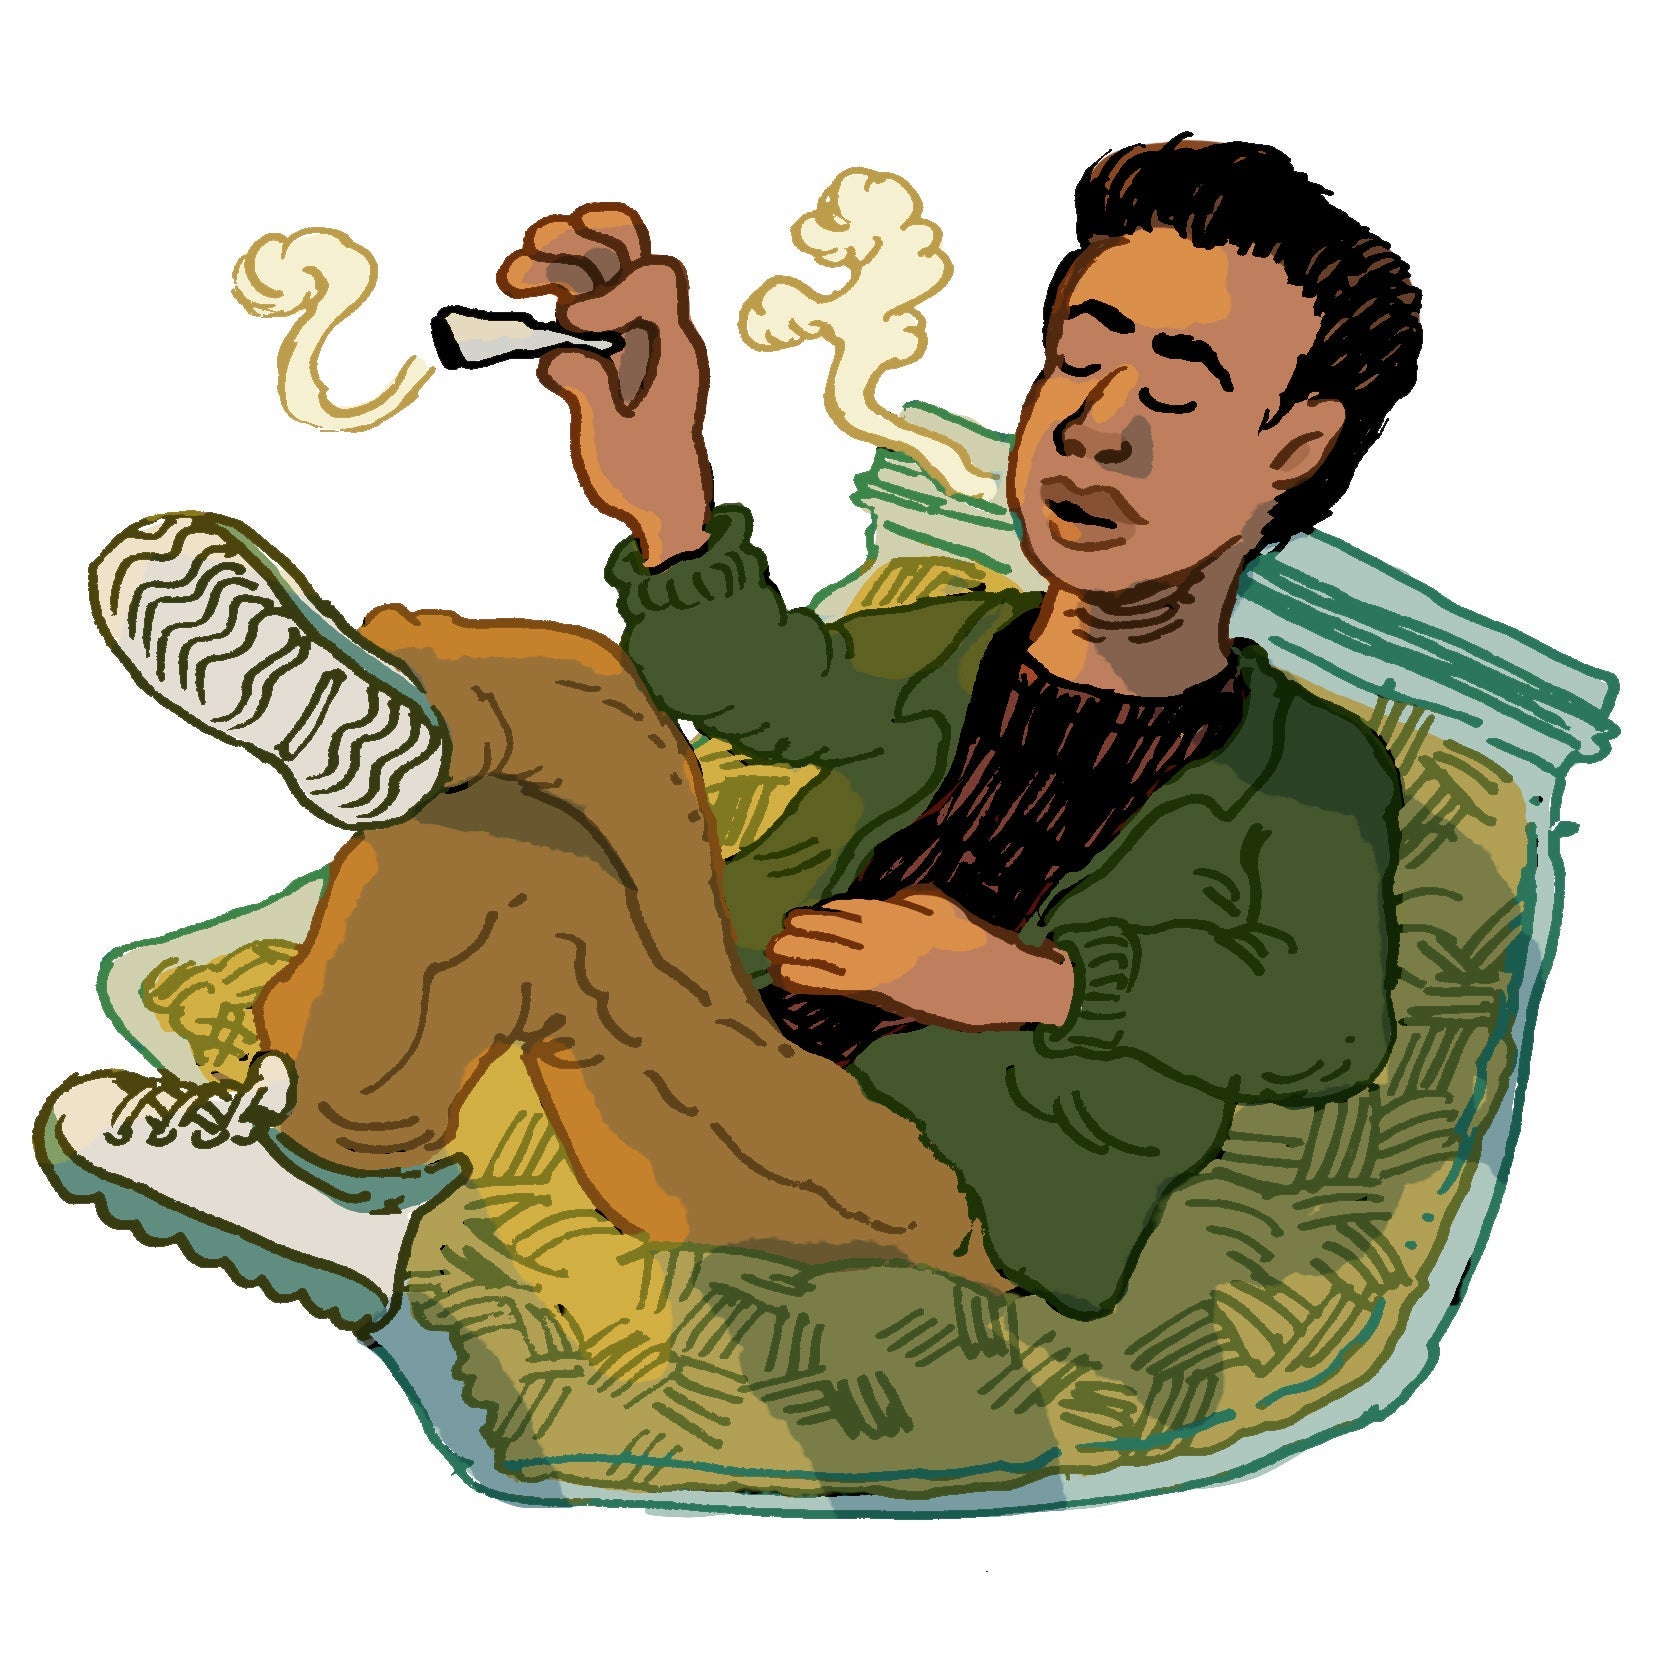 Illustration of Kumar smoking weed.